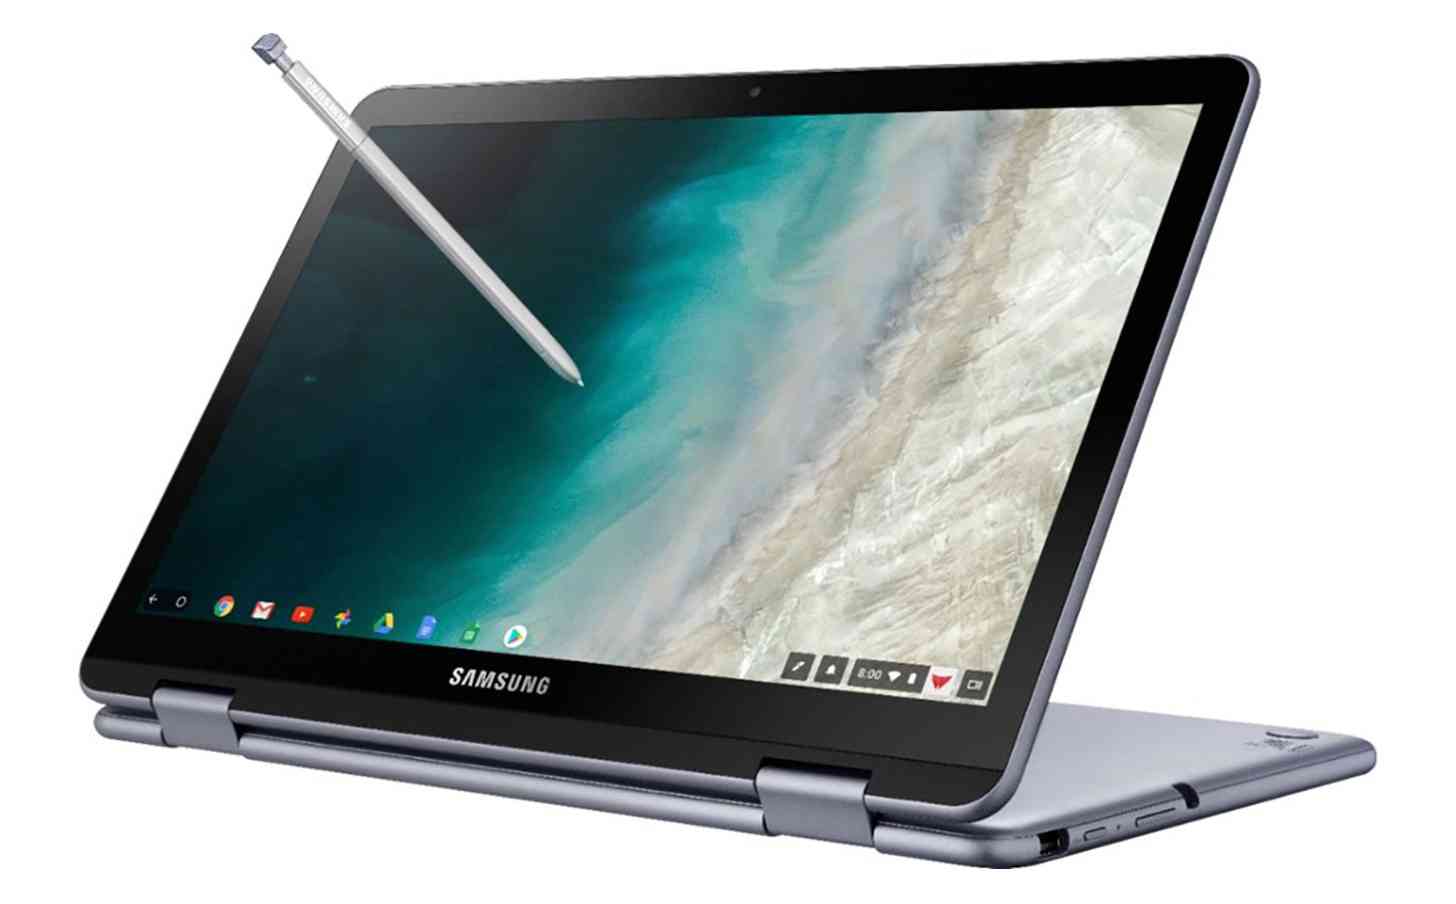 Samsung Chromebook Plus LTE tablet mode